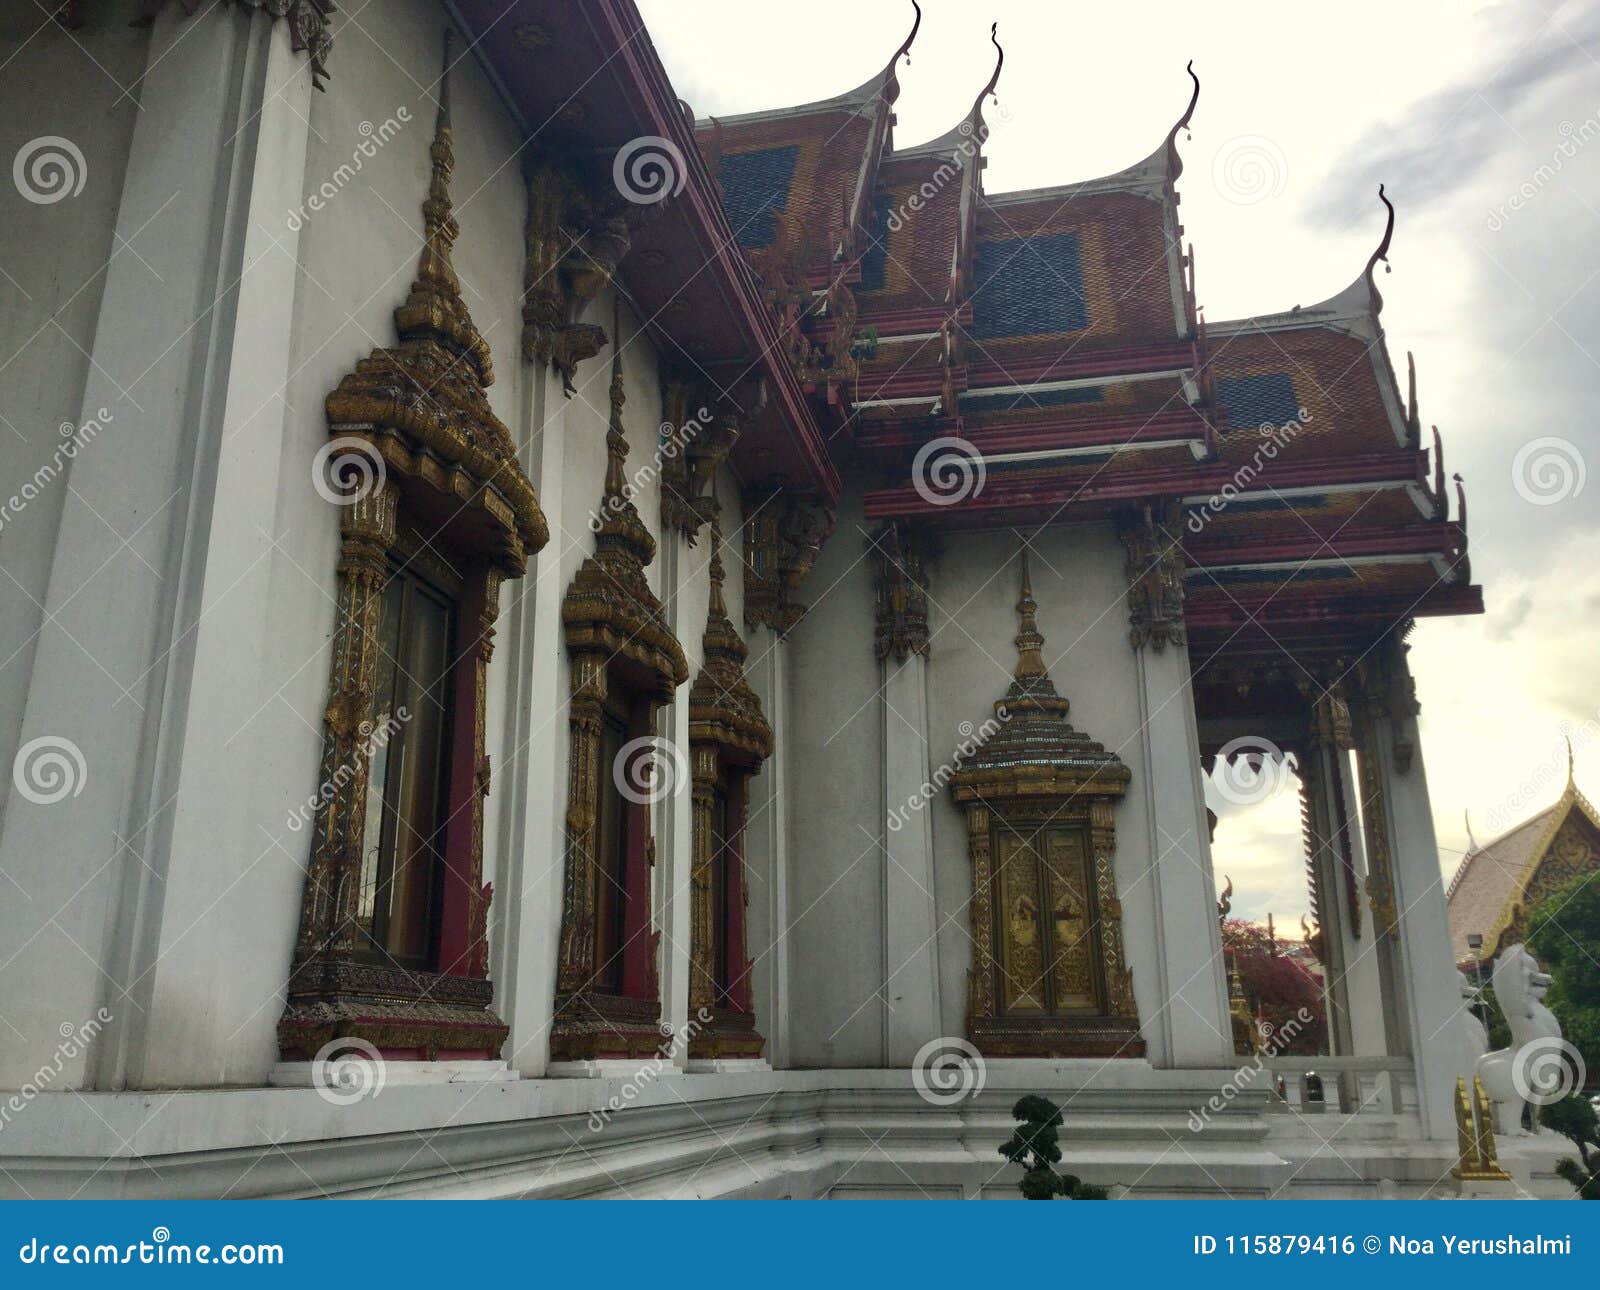 wat amarin temple , bangkok thailand